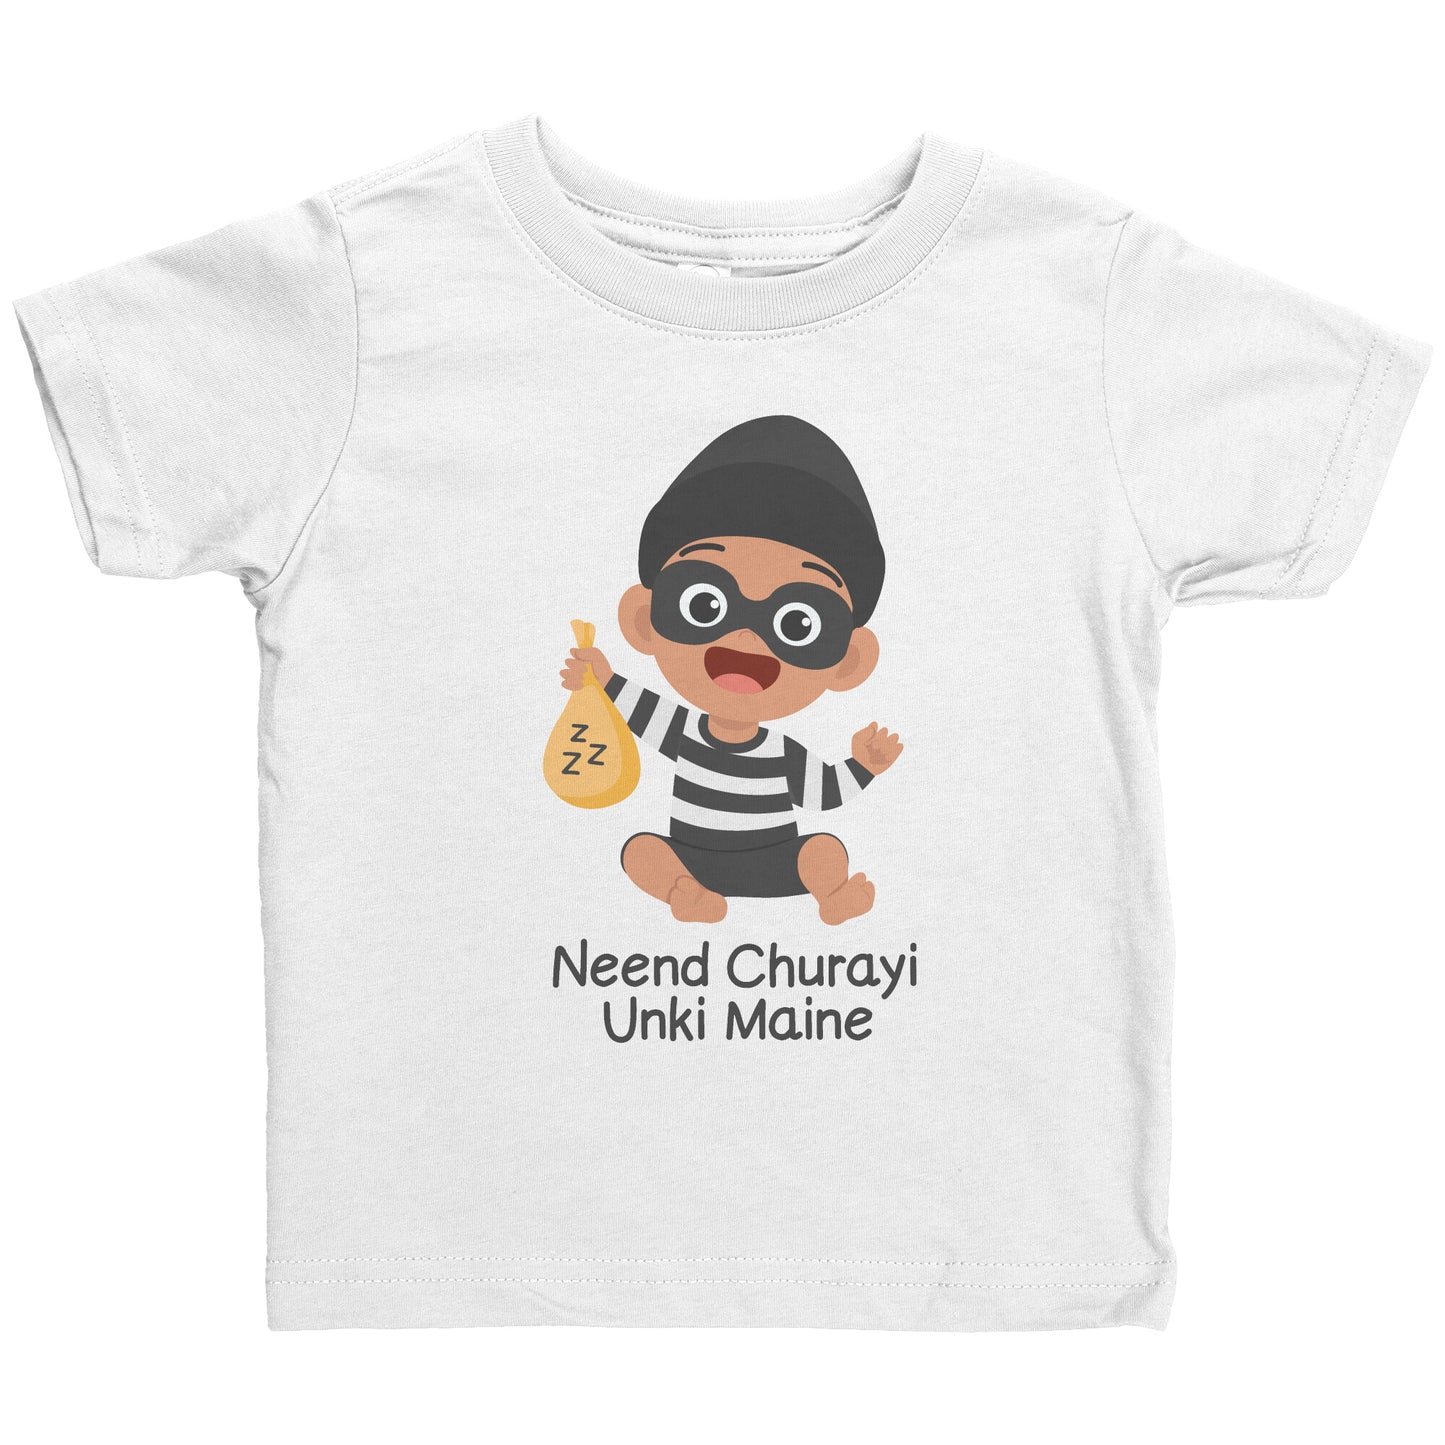 Neend Churayi Unki Maine Toddler Sizes